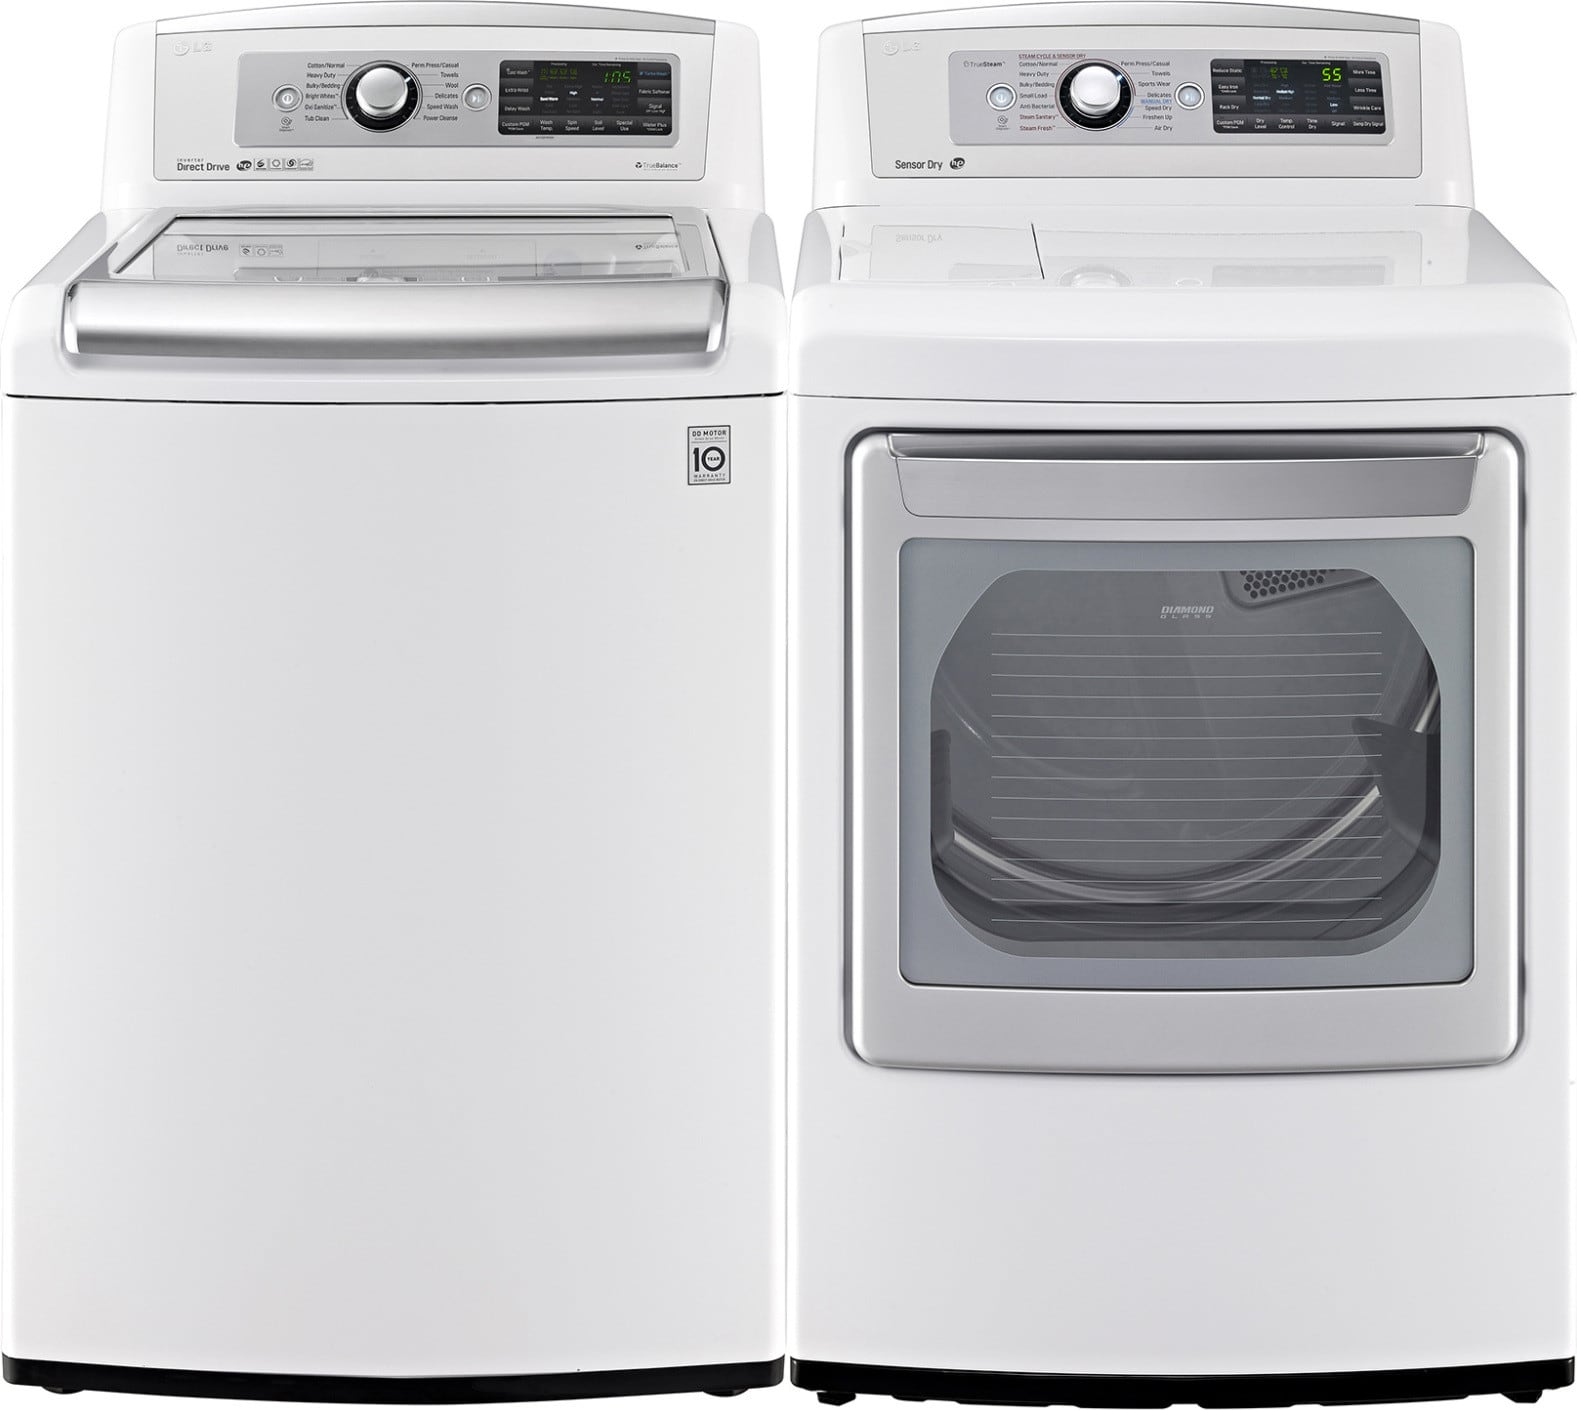 lg washer dryer instructions